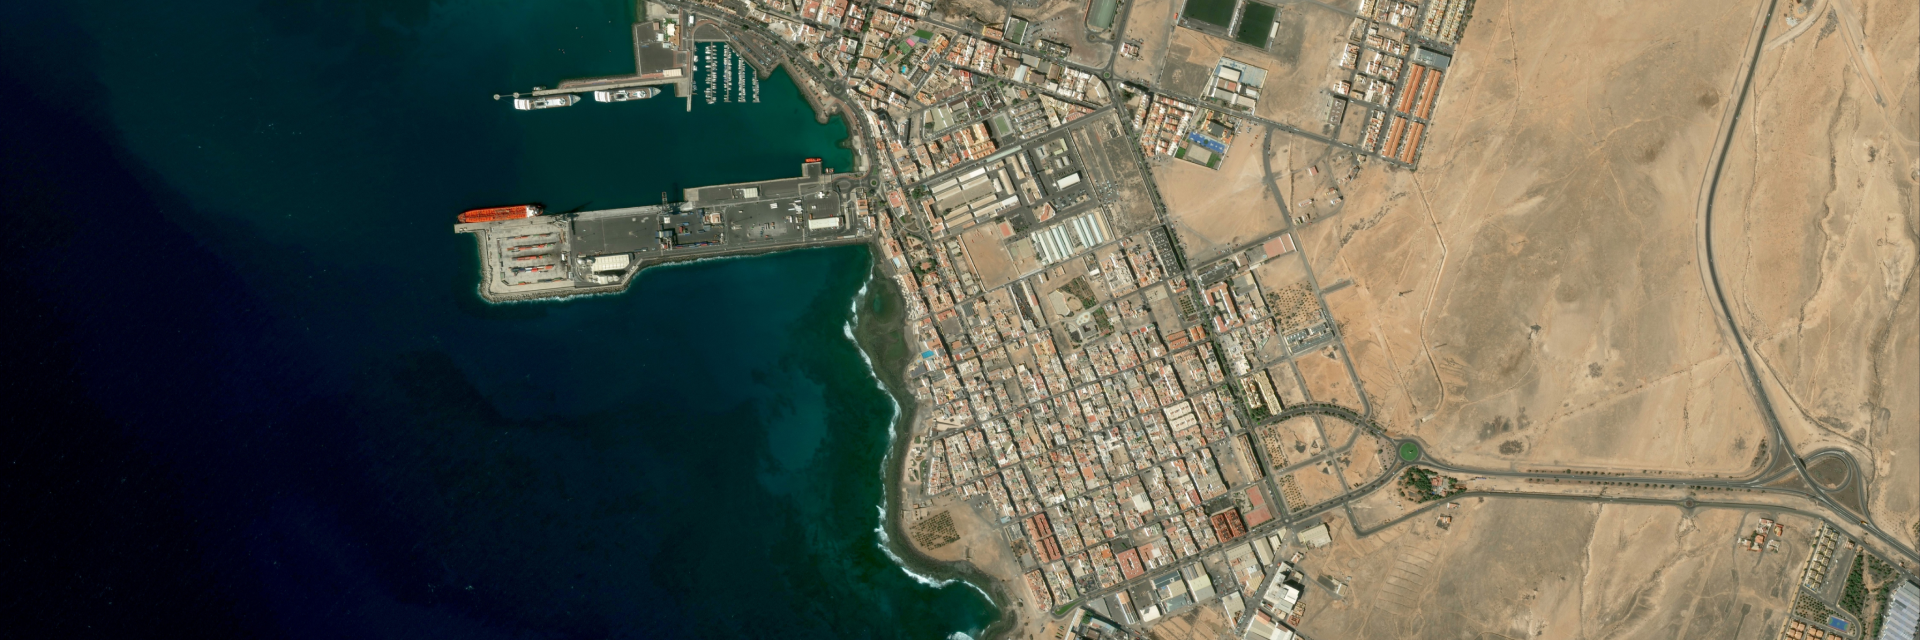 Fuerteventura Port 2 Banner